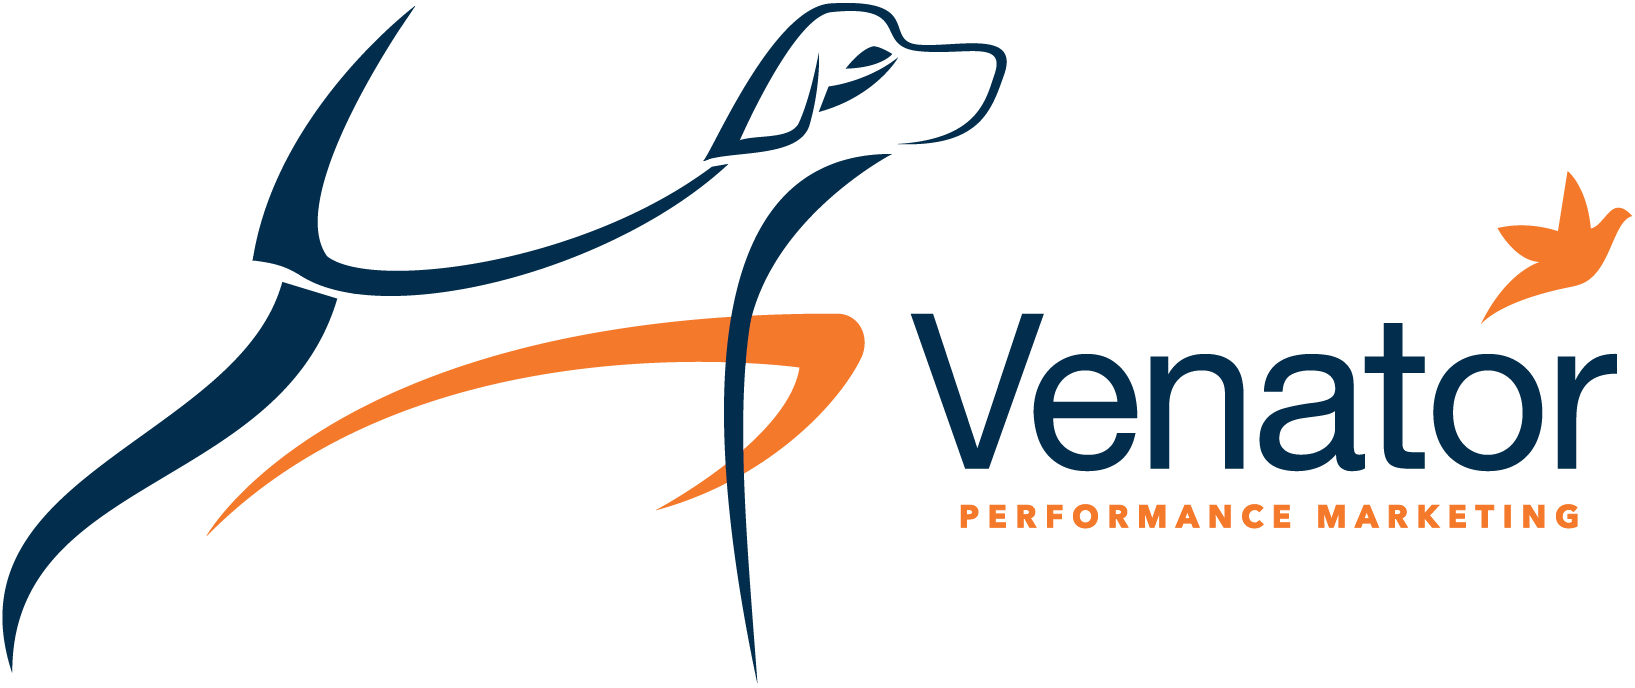 venator-performance-marketing-logo-full